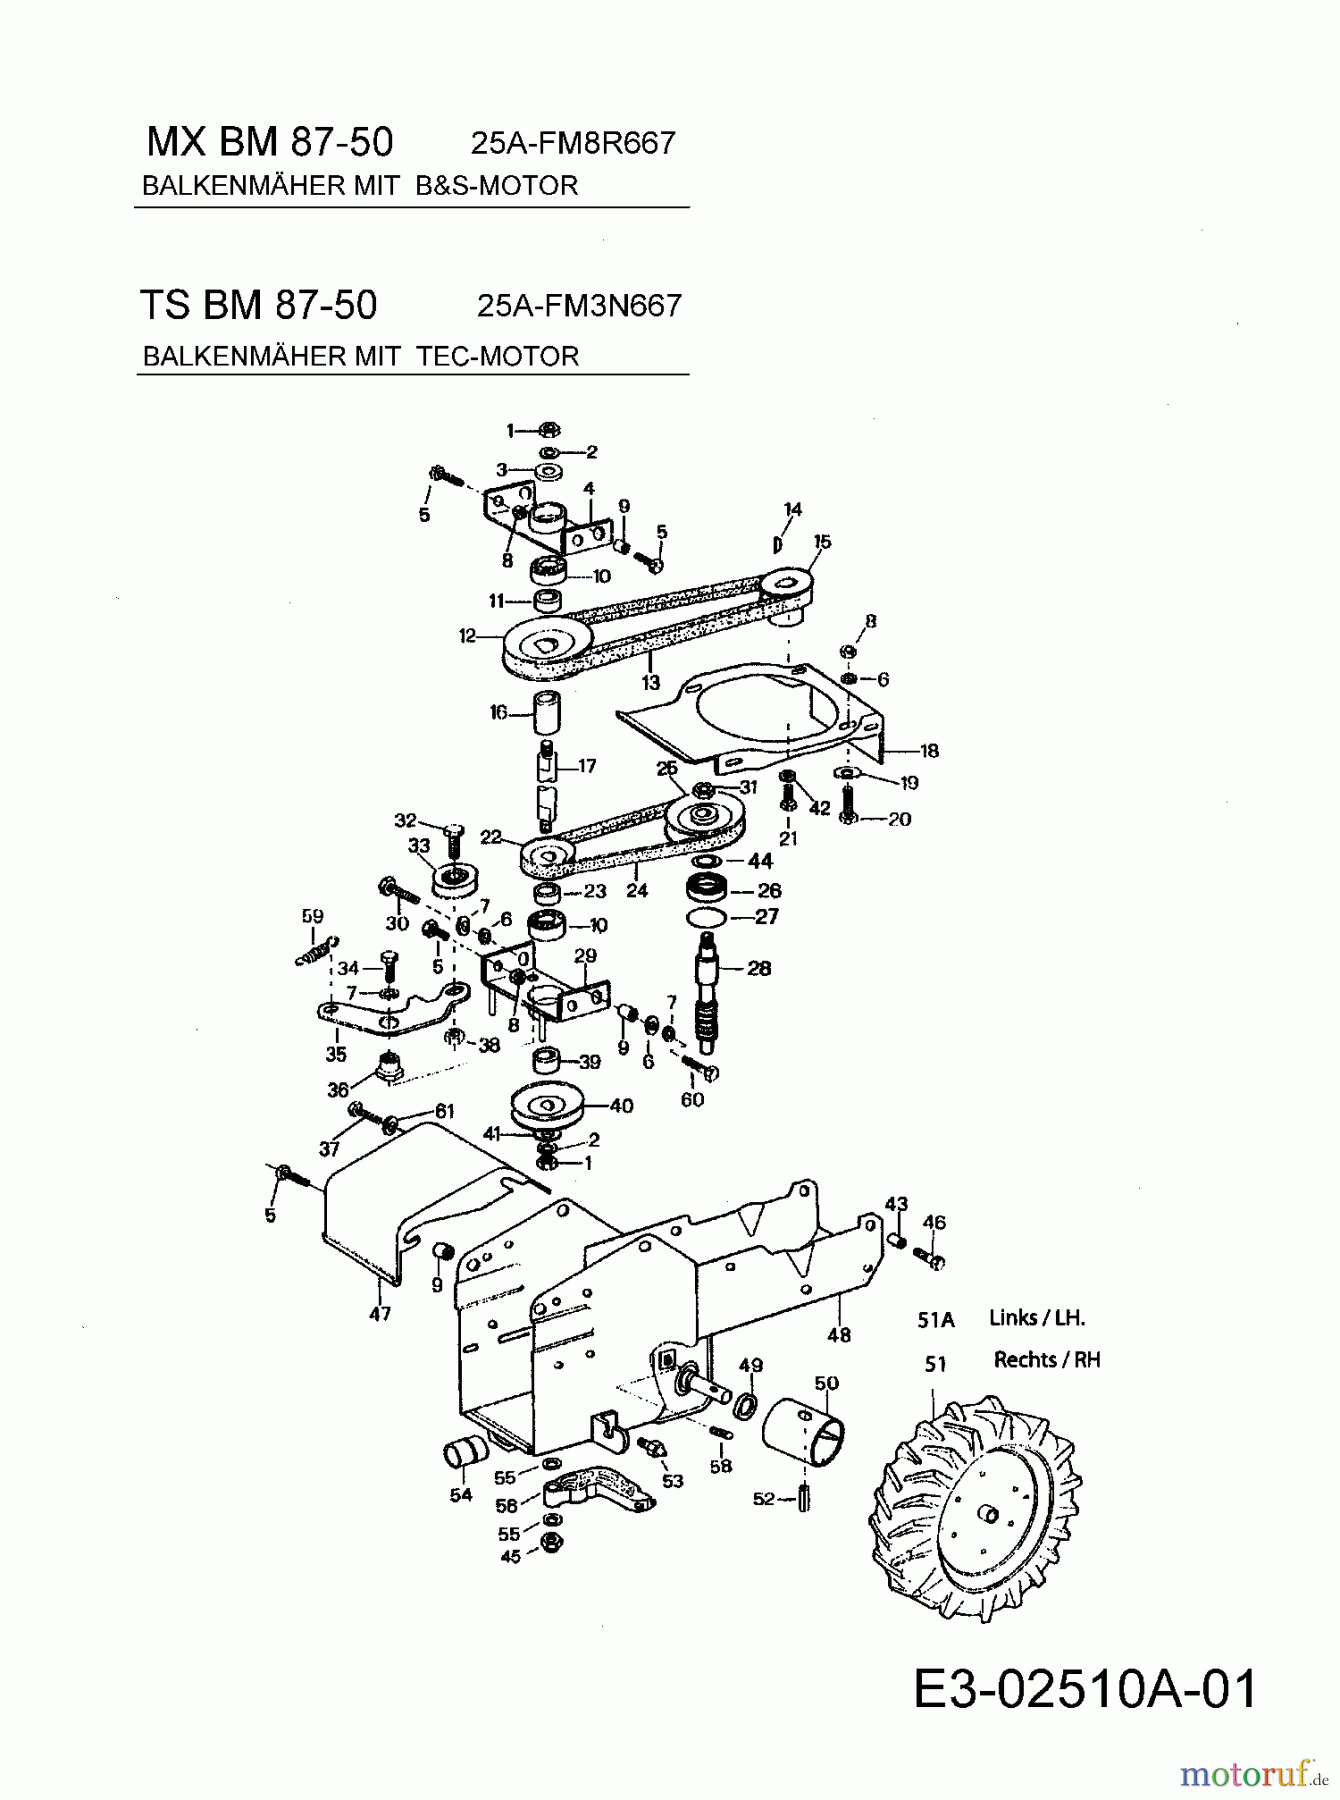  Turbo Silent Cutter bar mower TSBM 87-50 25A-FM3N667  (2005) Drive system, Wheels